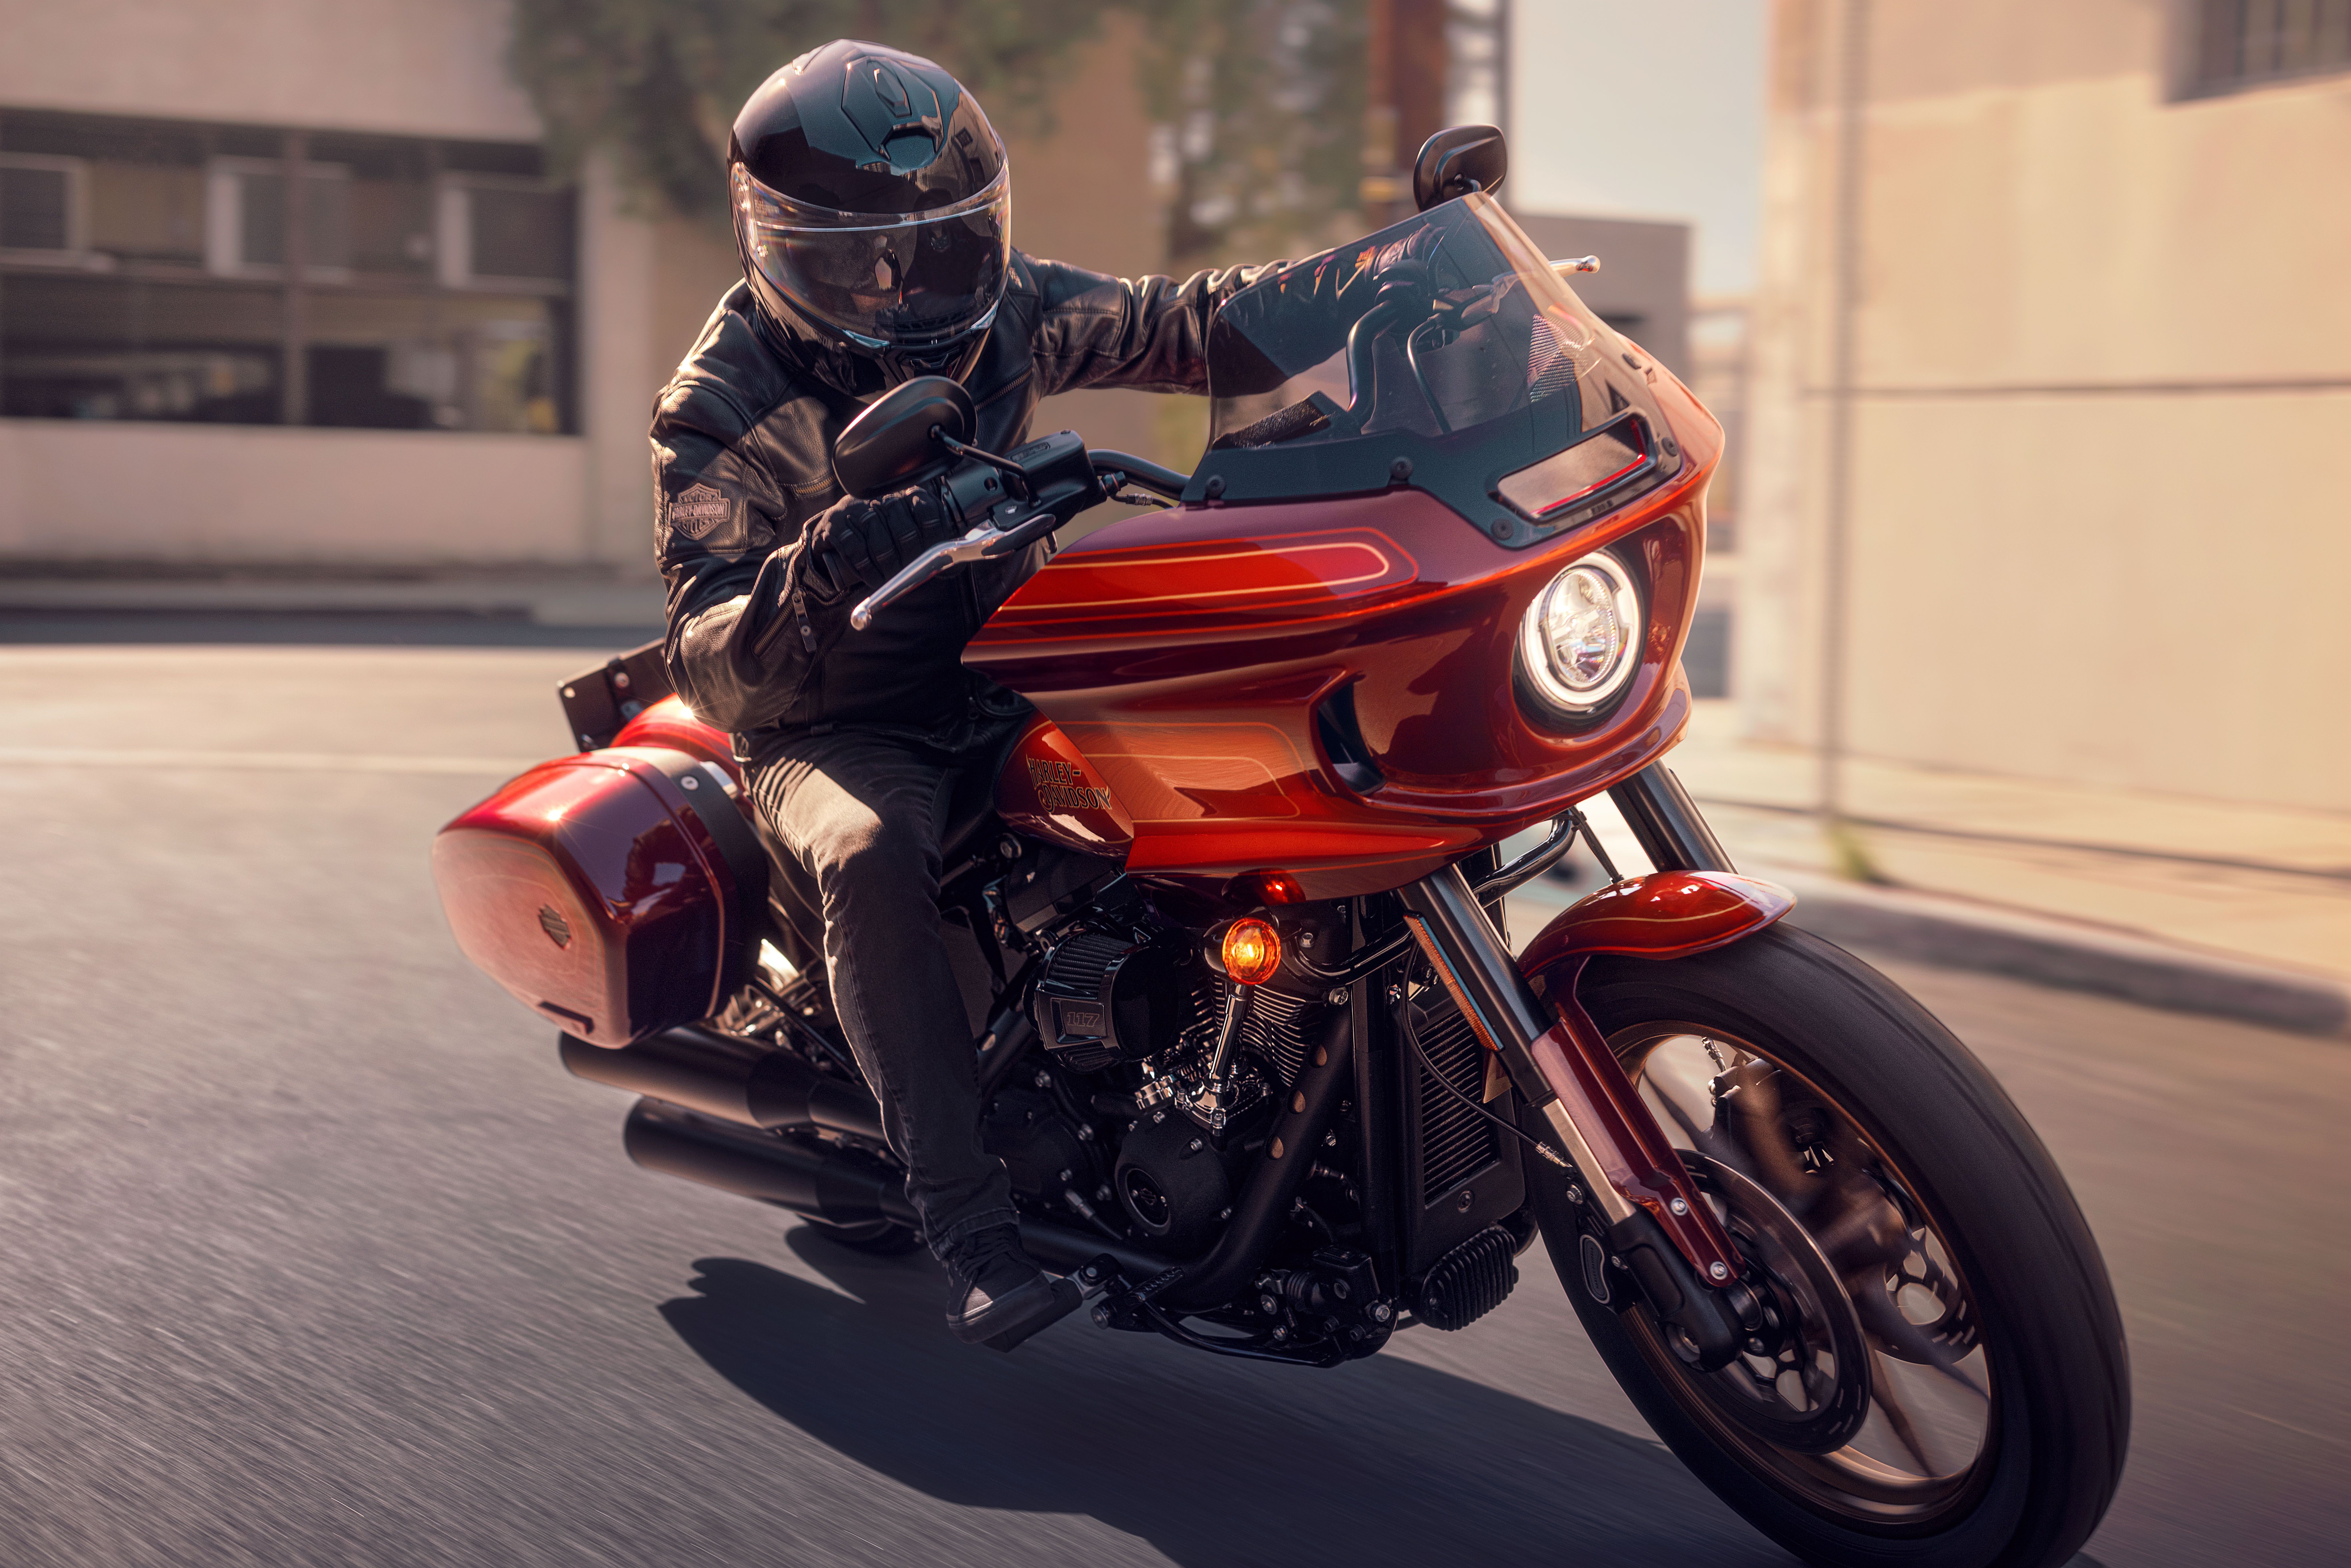 2022 Harley-Davidson Low Rider El Diablo cruising on the street